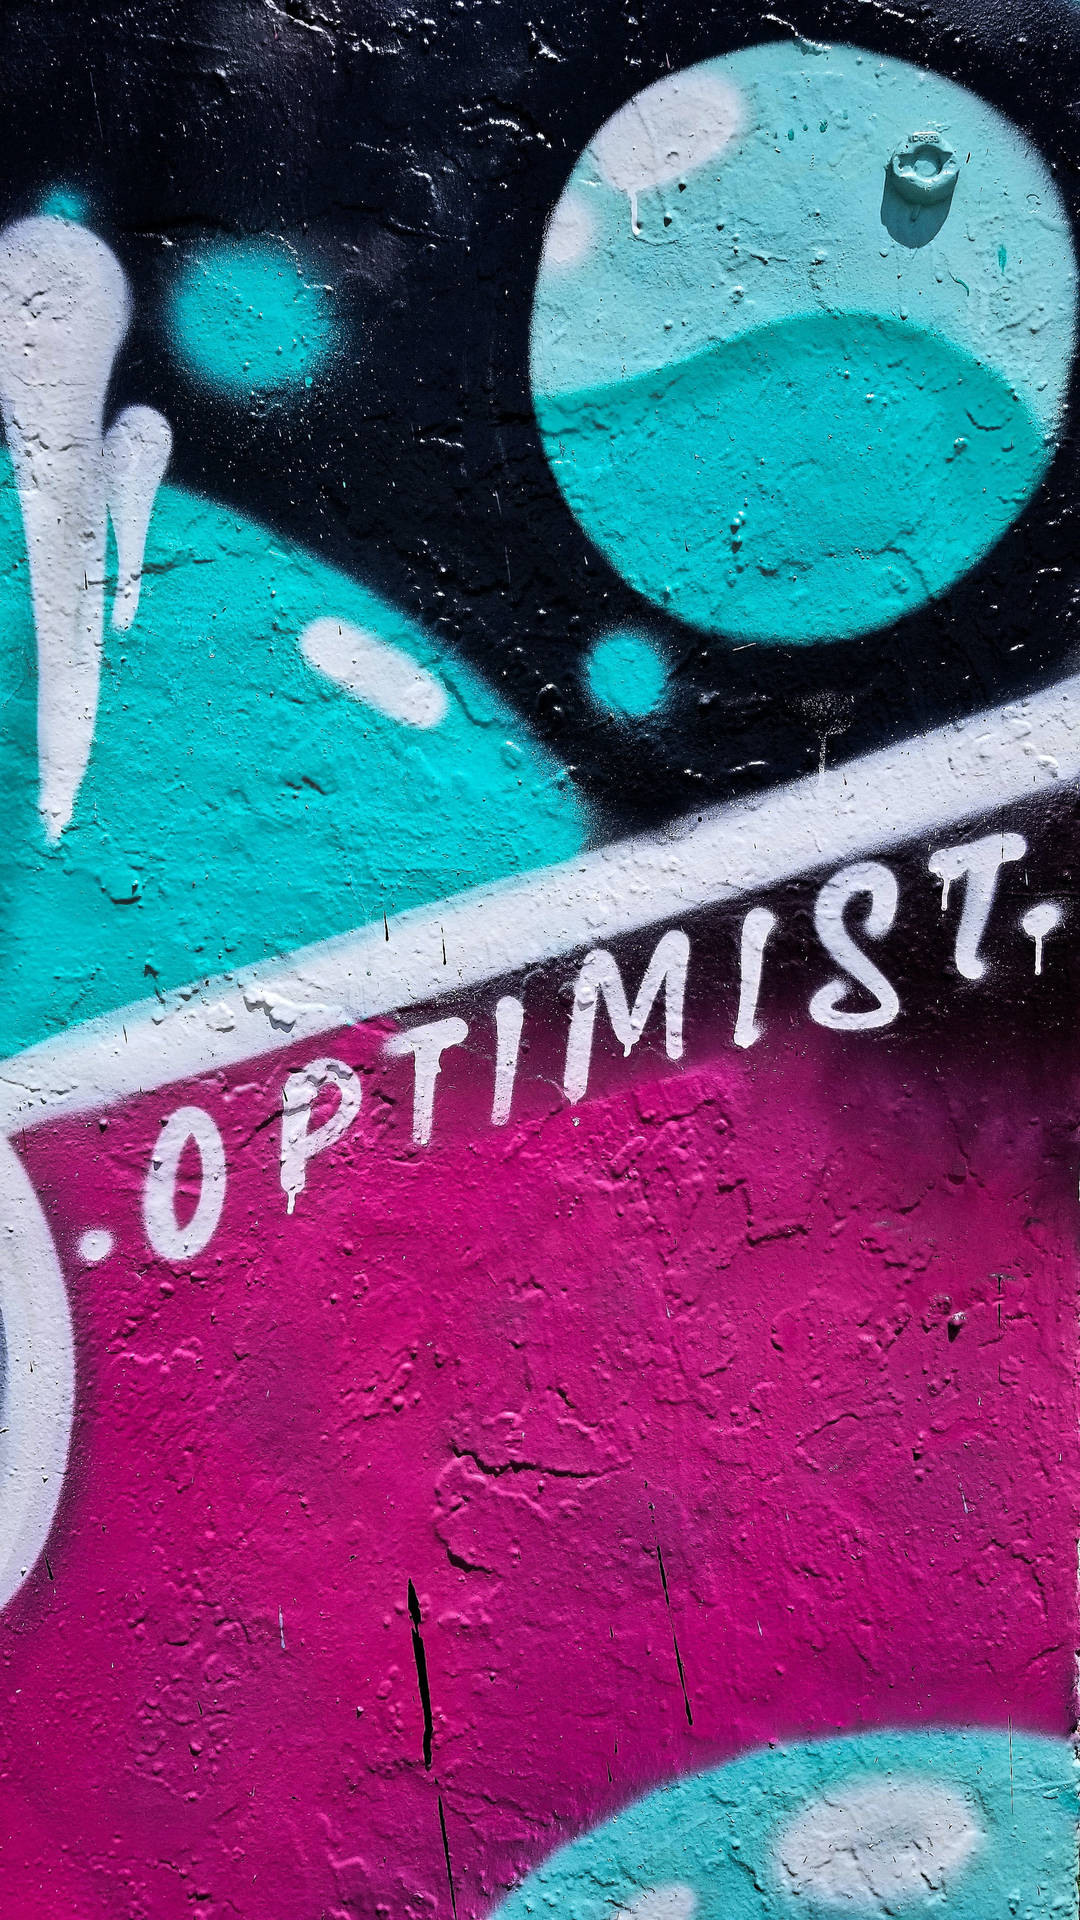 Optimist Abstract Wall Graffiti Iphone Wallpaper